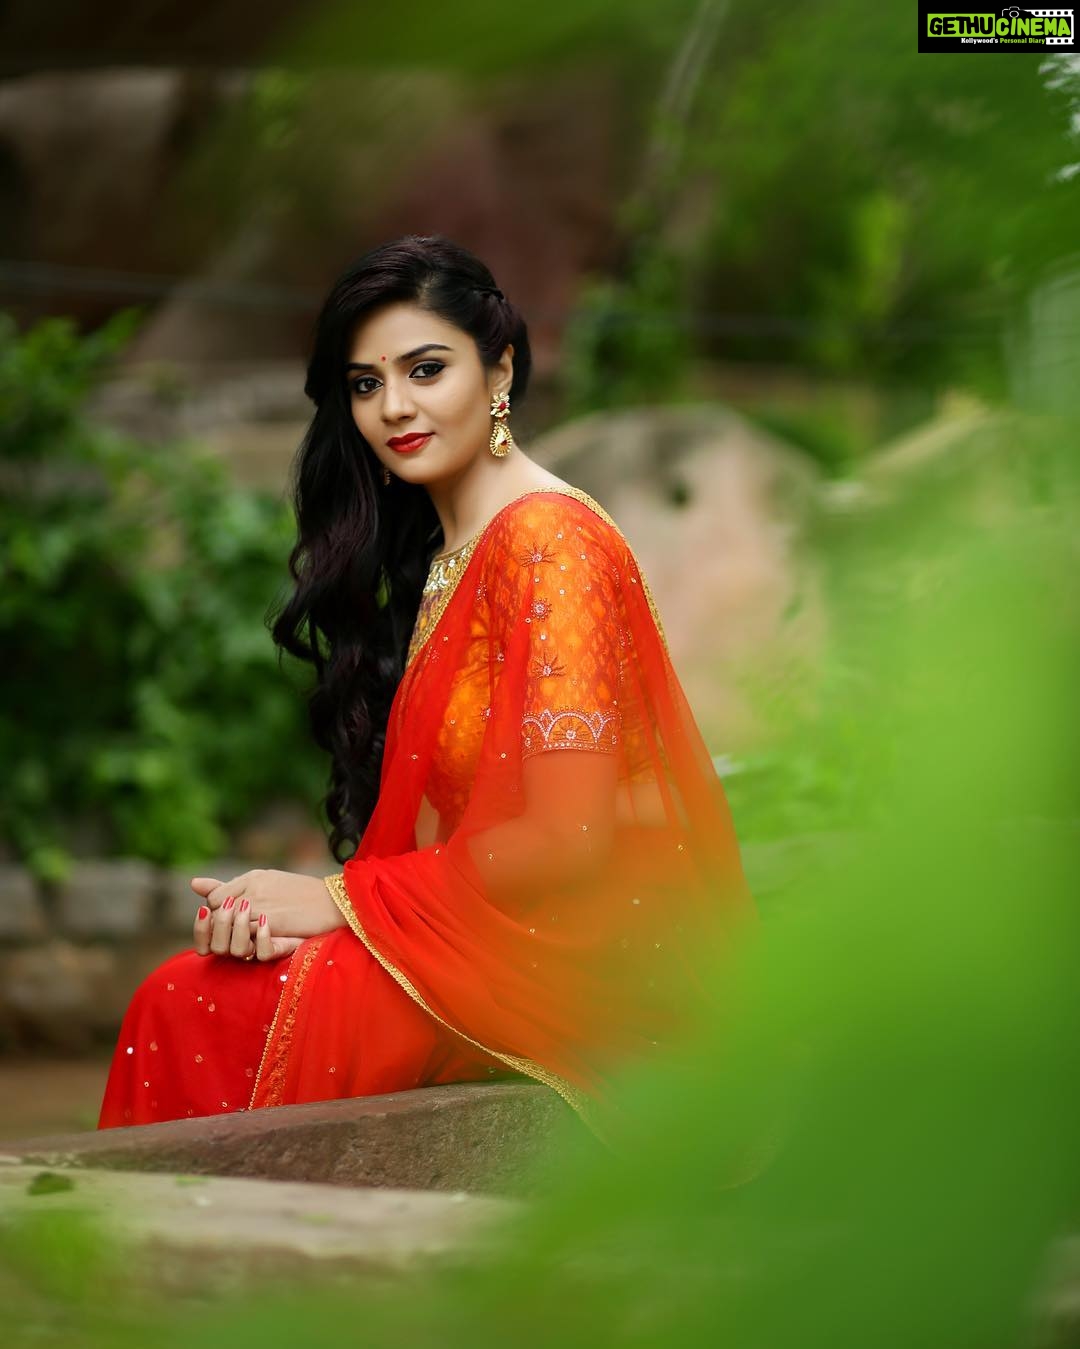 Sreemukhi Sex Videos Outdoor - Actress Sreemukhi Instagram Photos and Posts August 2016 - Gethu Cinema